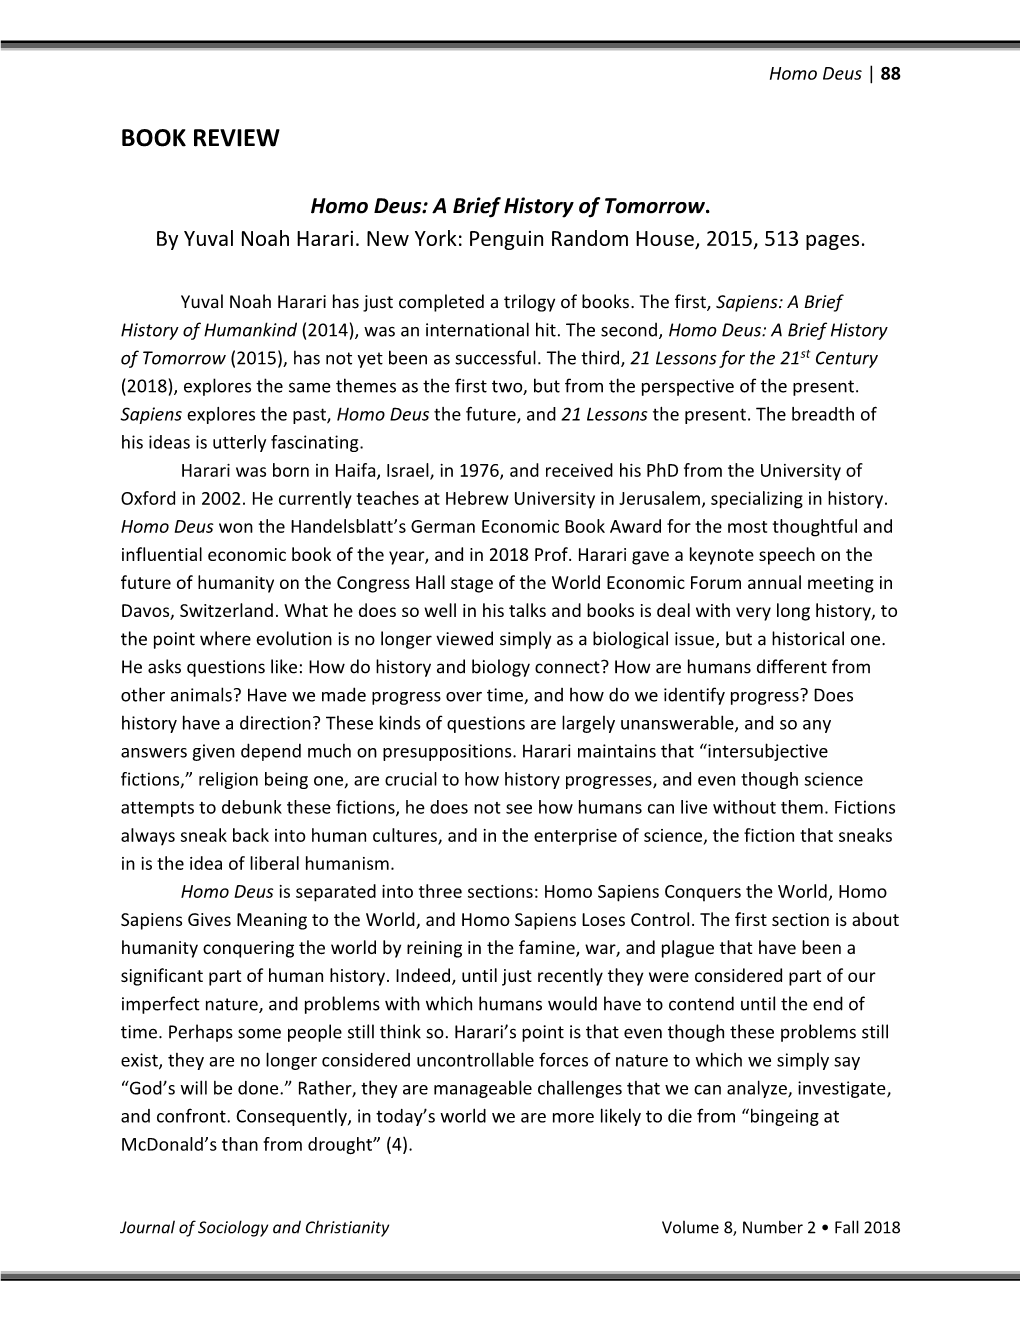 A Brief History of Tomorrow. by Yuval Noah Harari. New York: Penguin Random House, 2015, 513 Pages